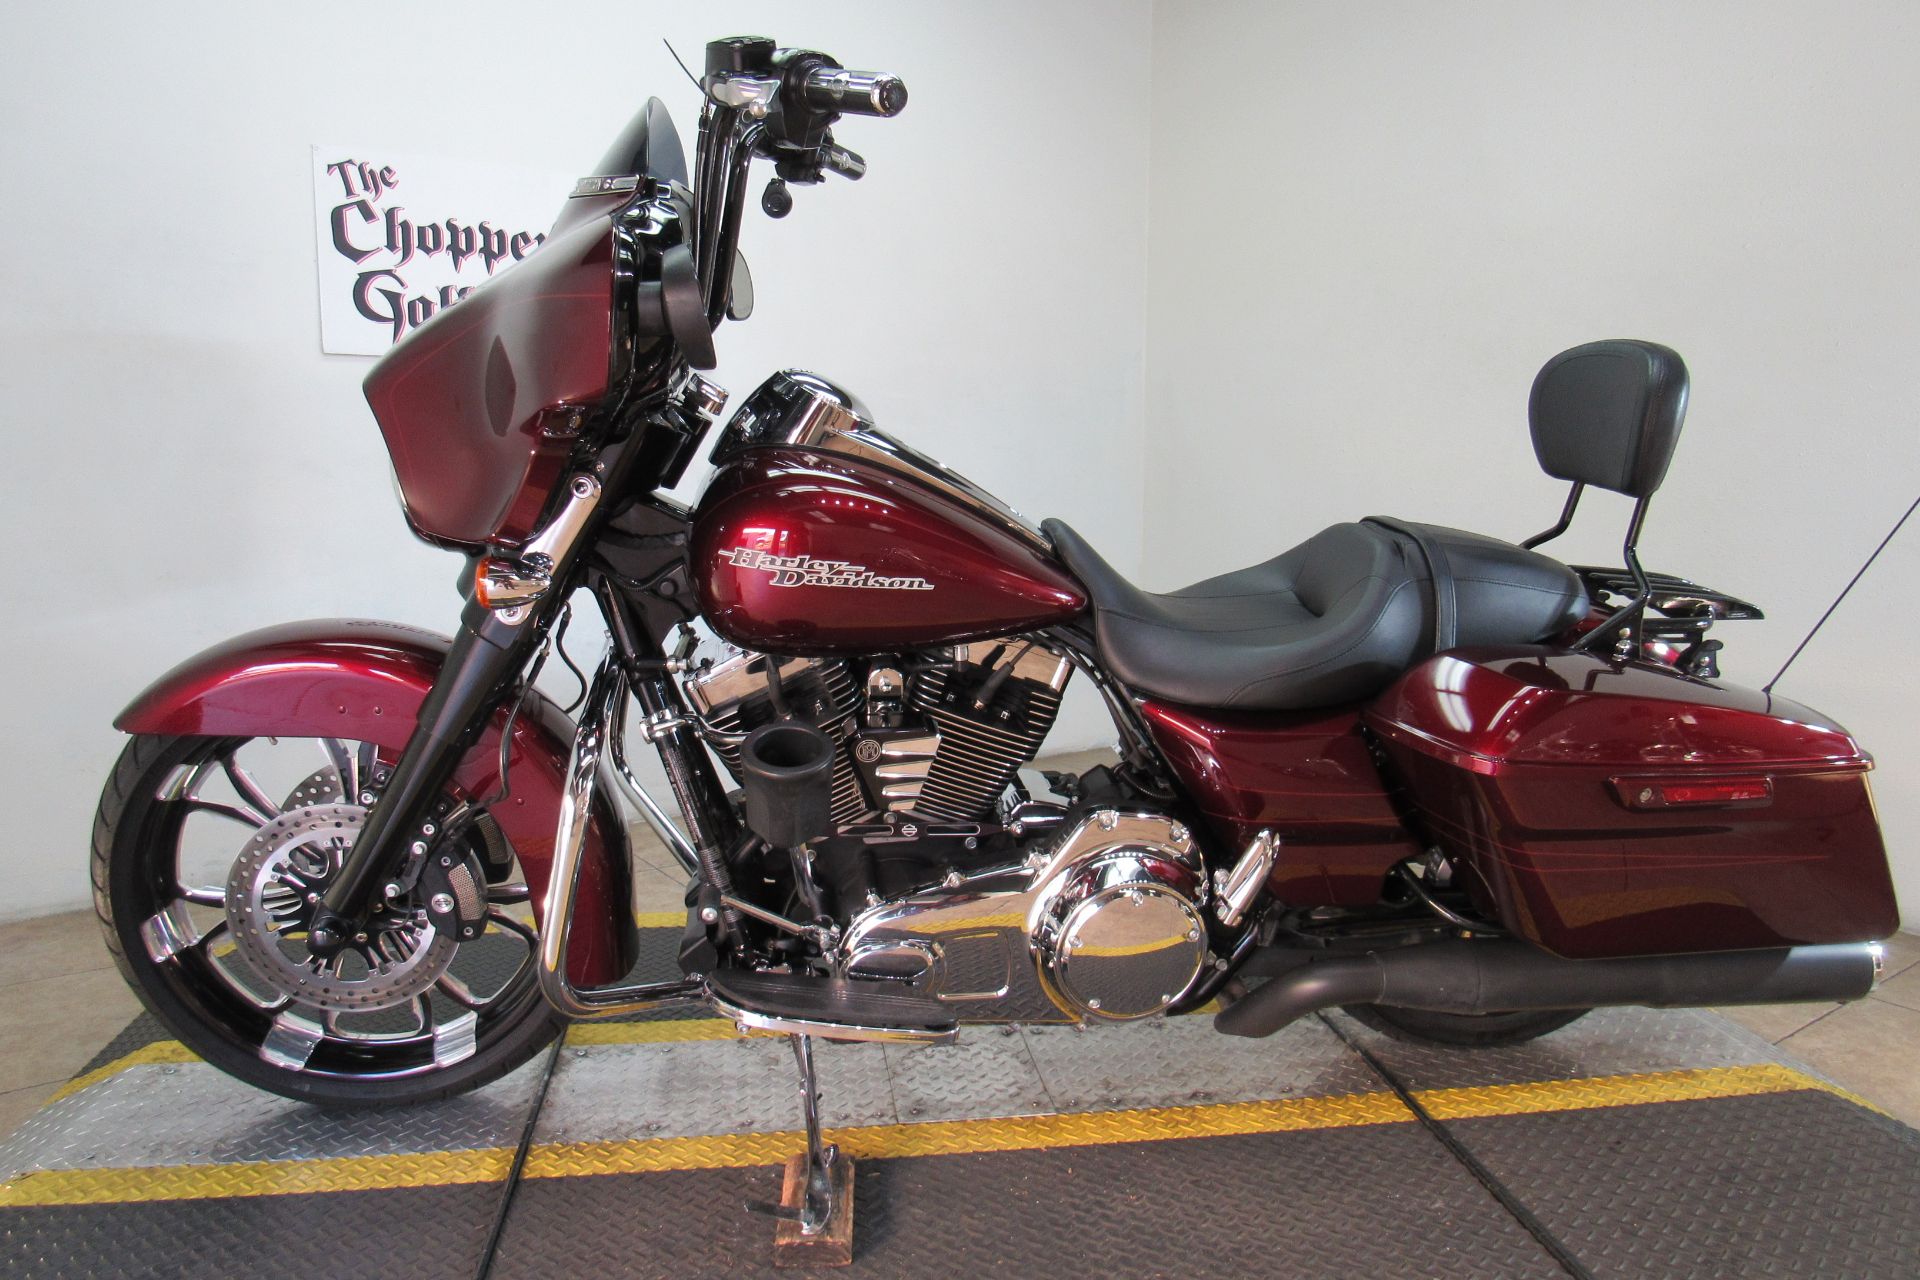 2014 Harley-Davidson Street Glide® Special in Temecula, California - Photo 2